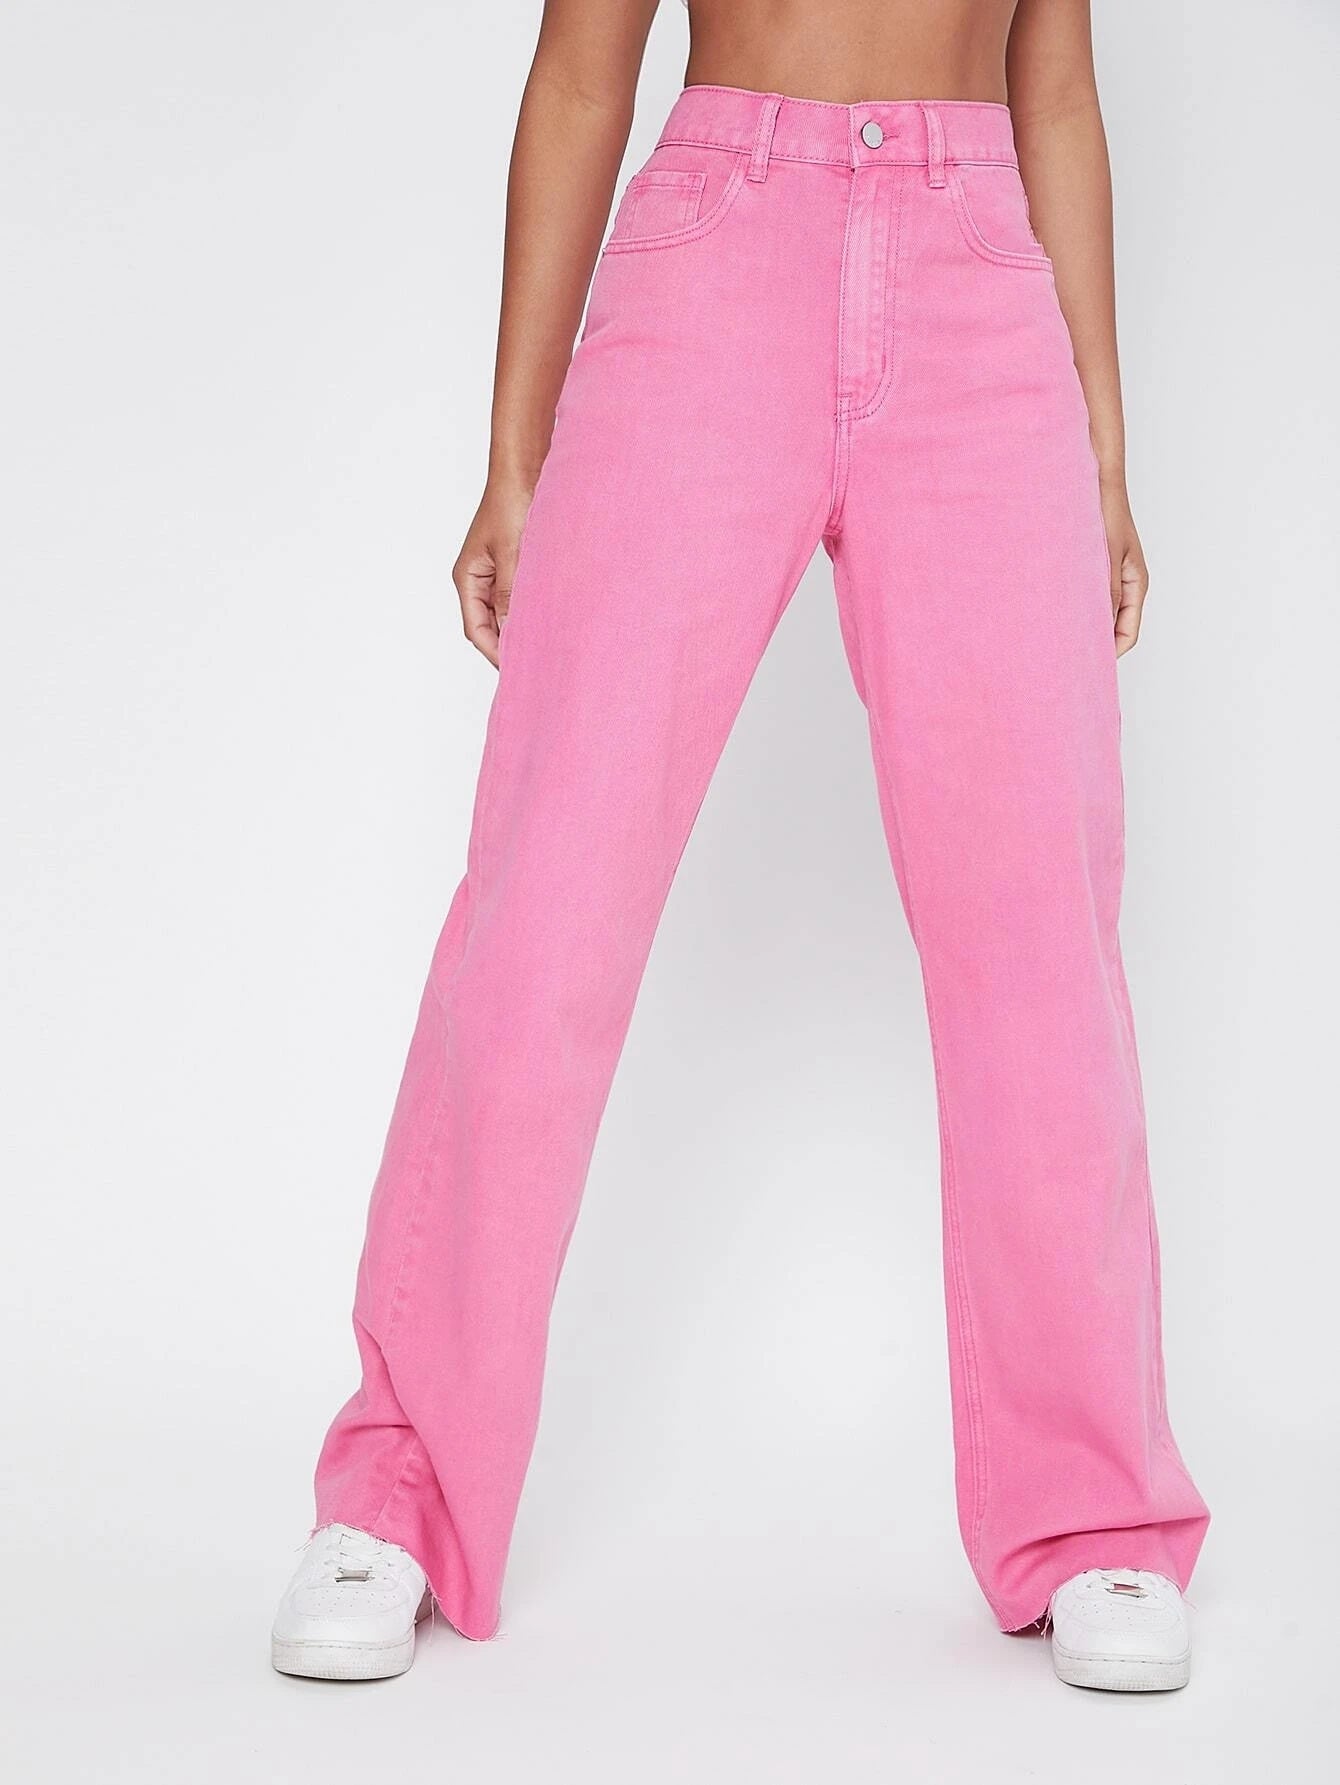 Antmvs Pink Raw Cut Straight Jeans, Loose Fit High Rise Slant Pockets Denim Pants, Women's Denim Jeans & Clothing